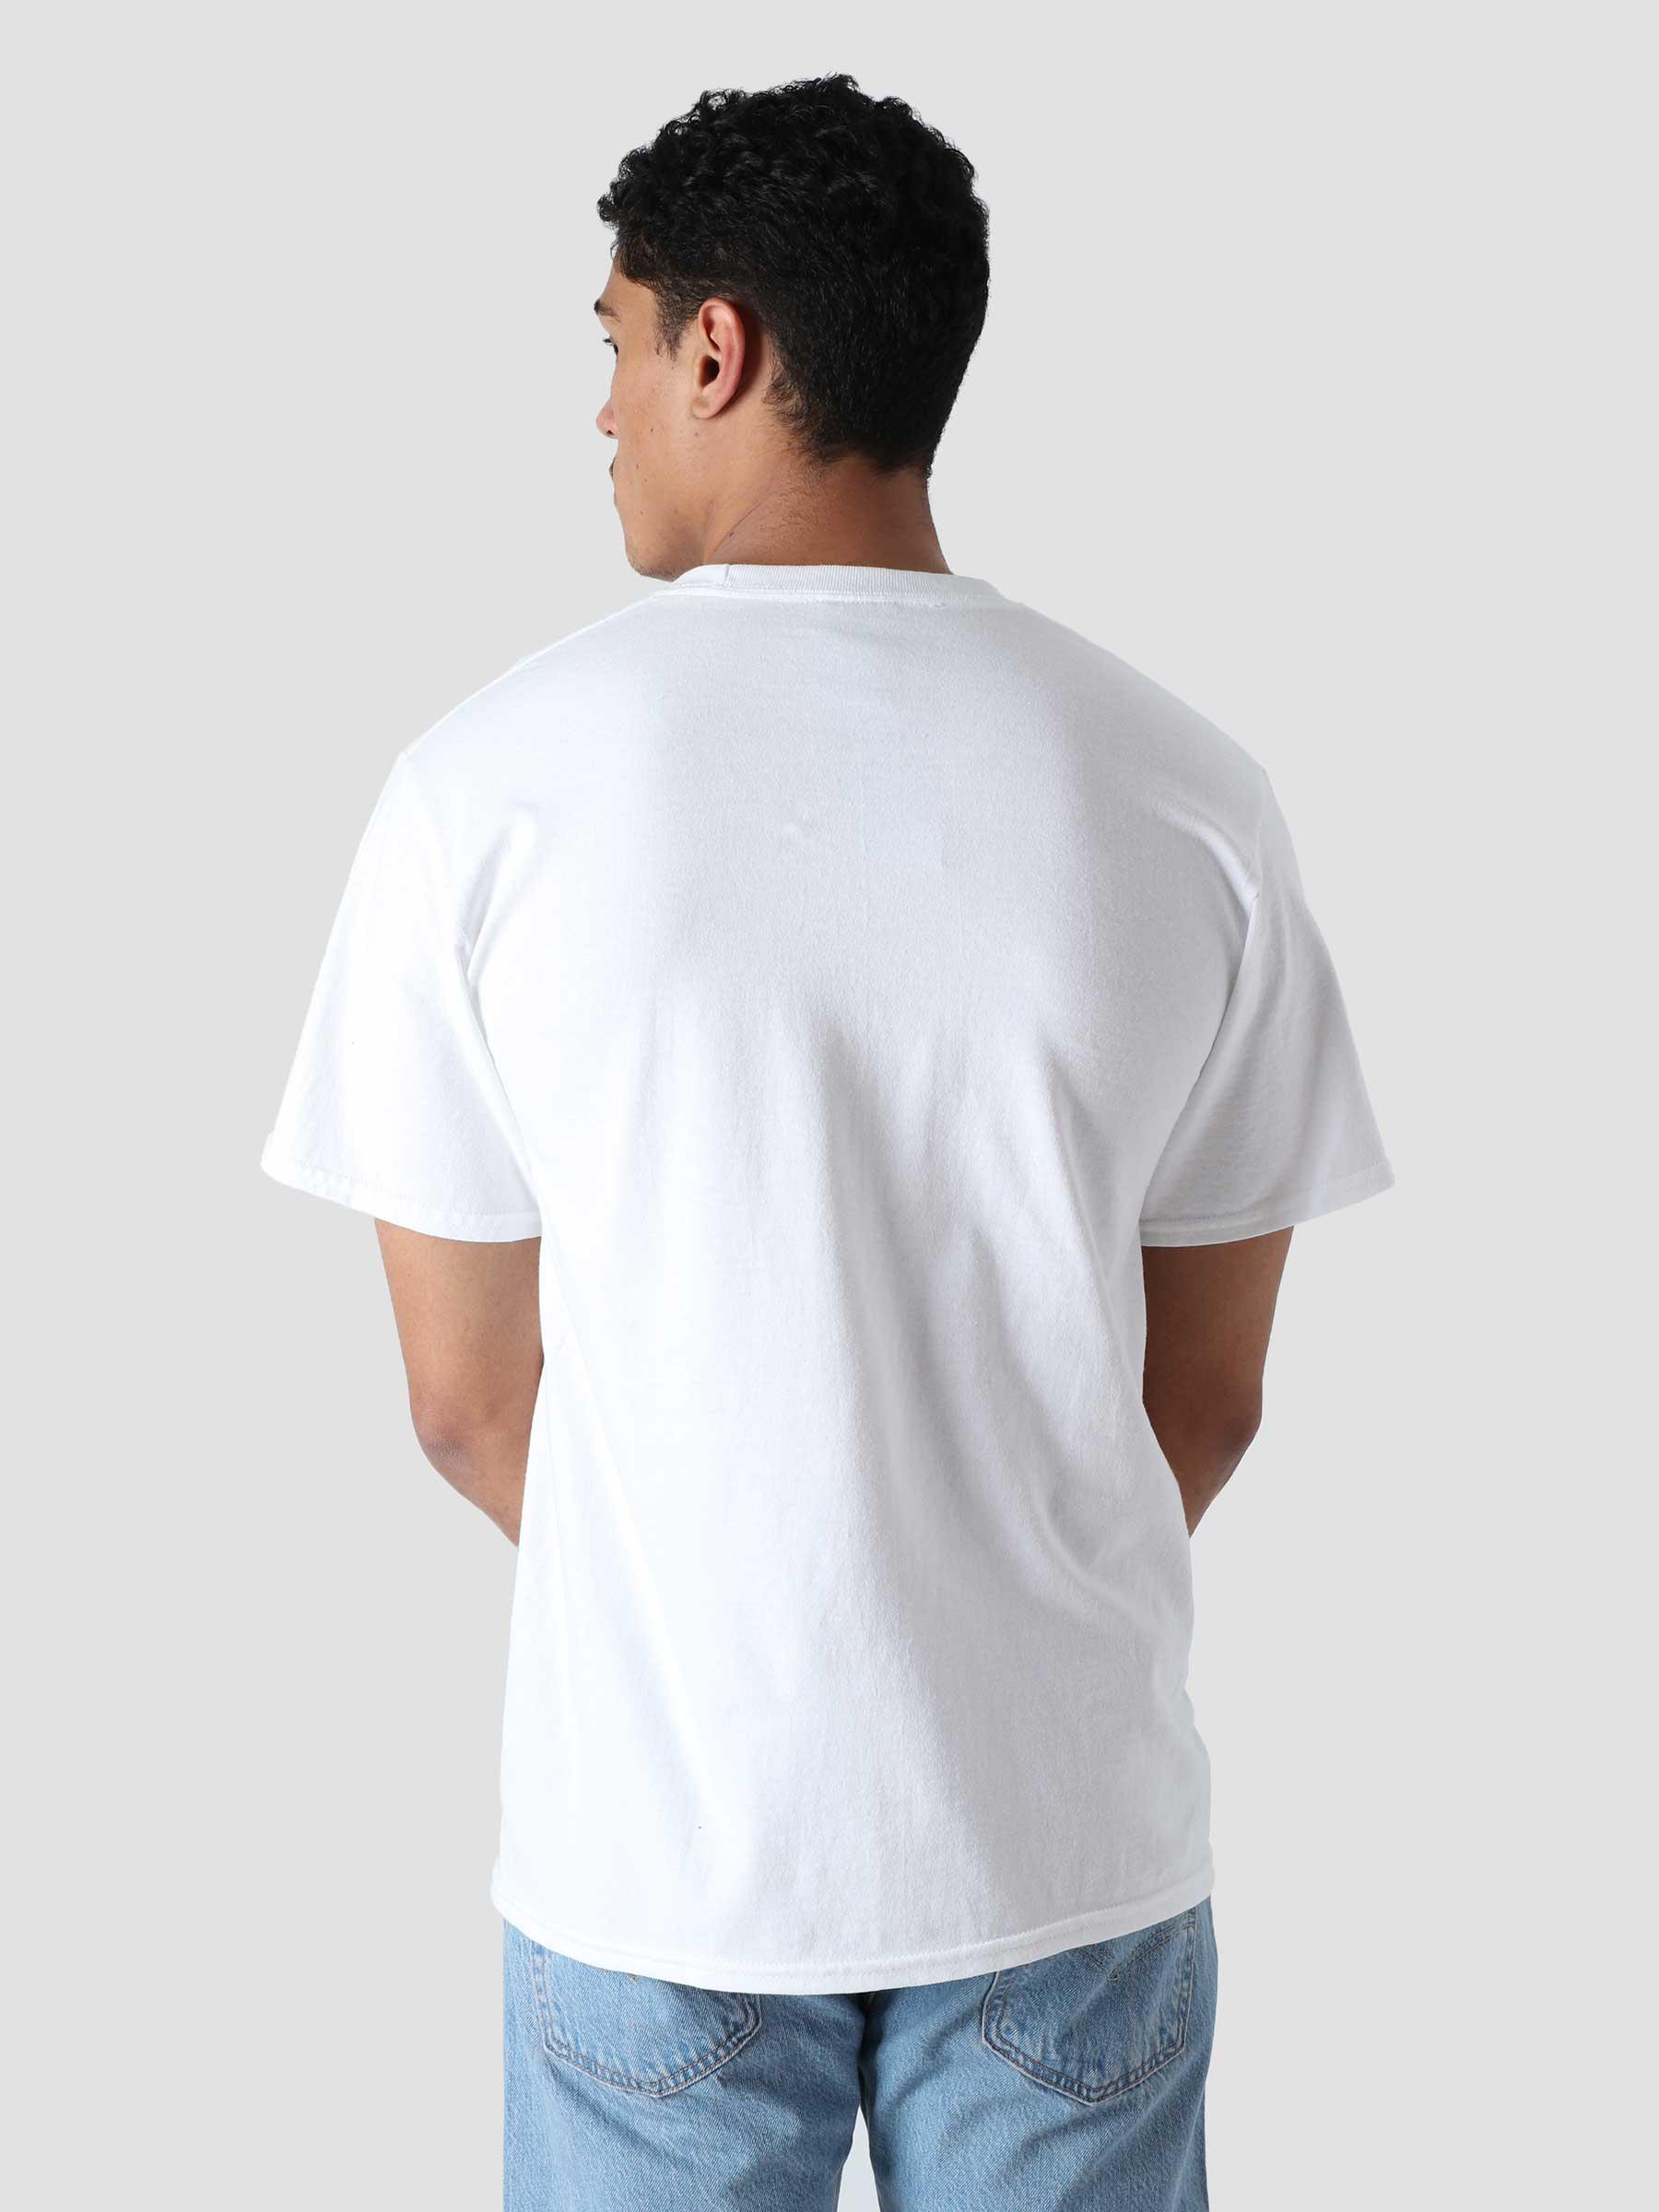 Vvs S/S T-Shirt White TS01575